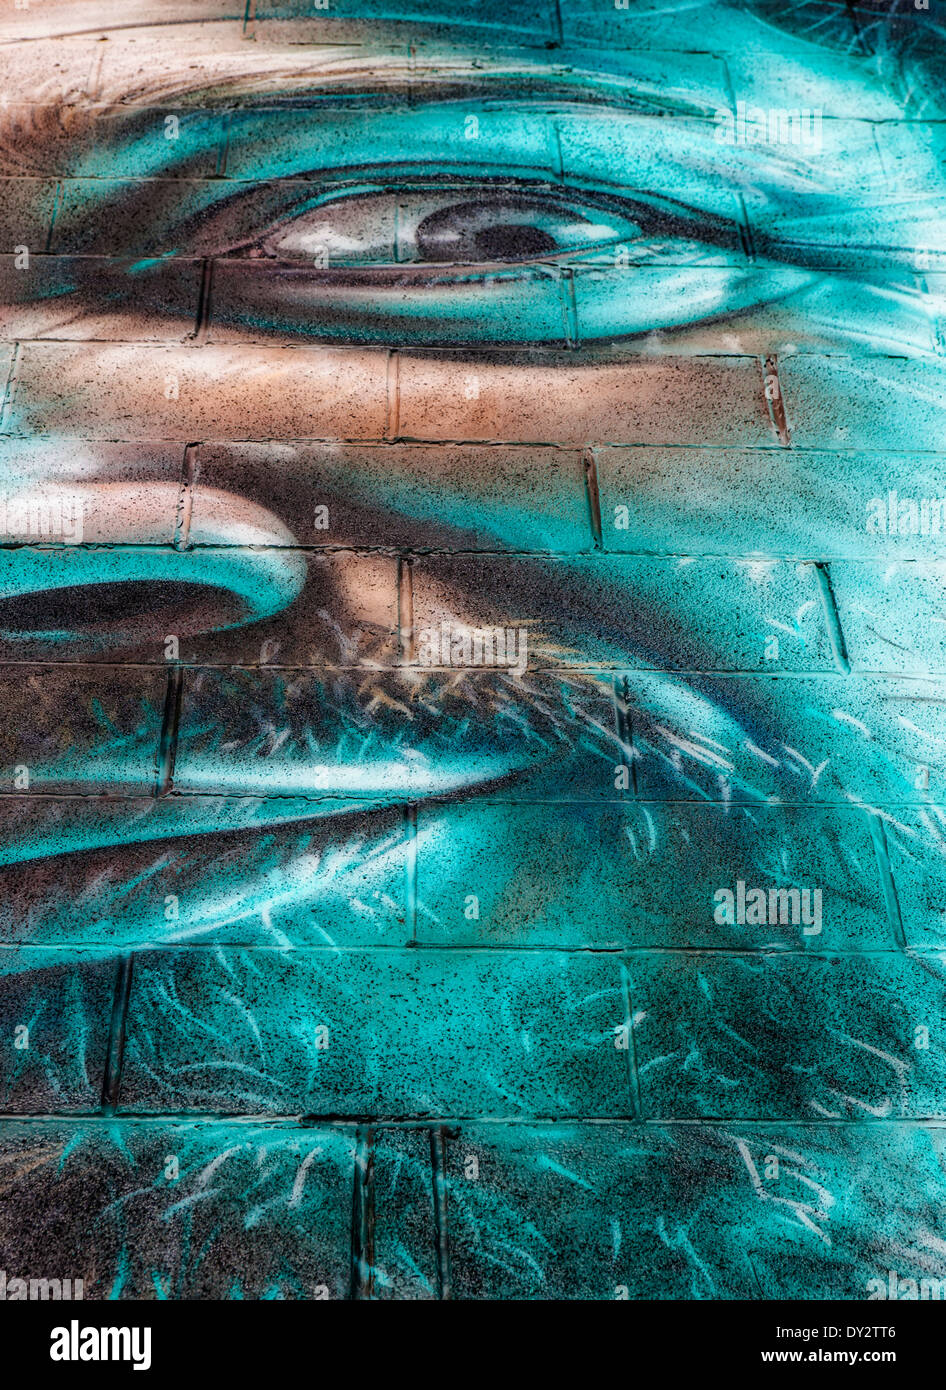 Gesicht Auge Blackpool Graffiti Farbe Design Kunst Muster Wand